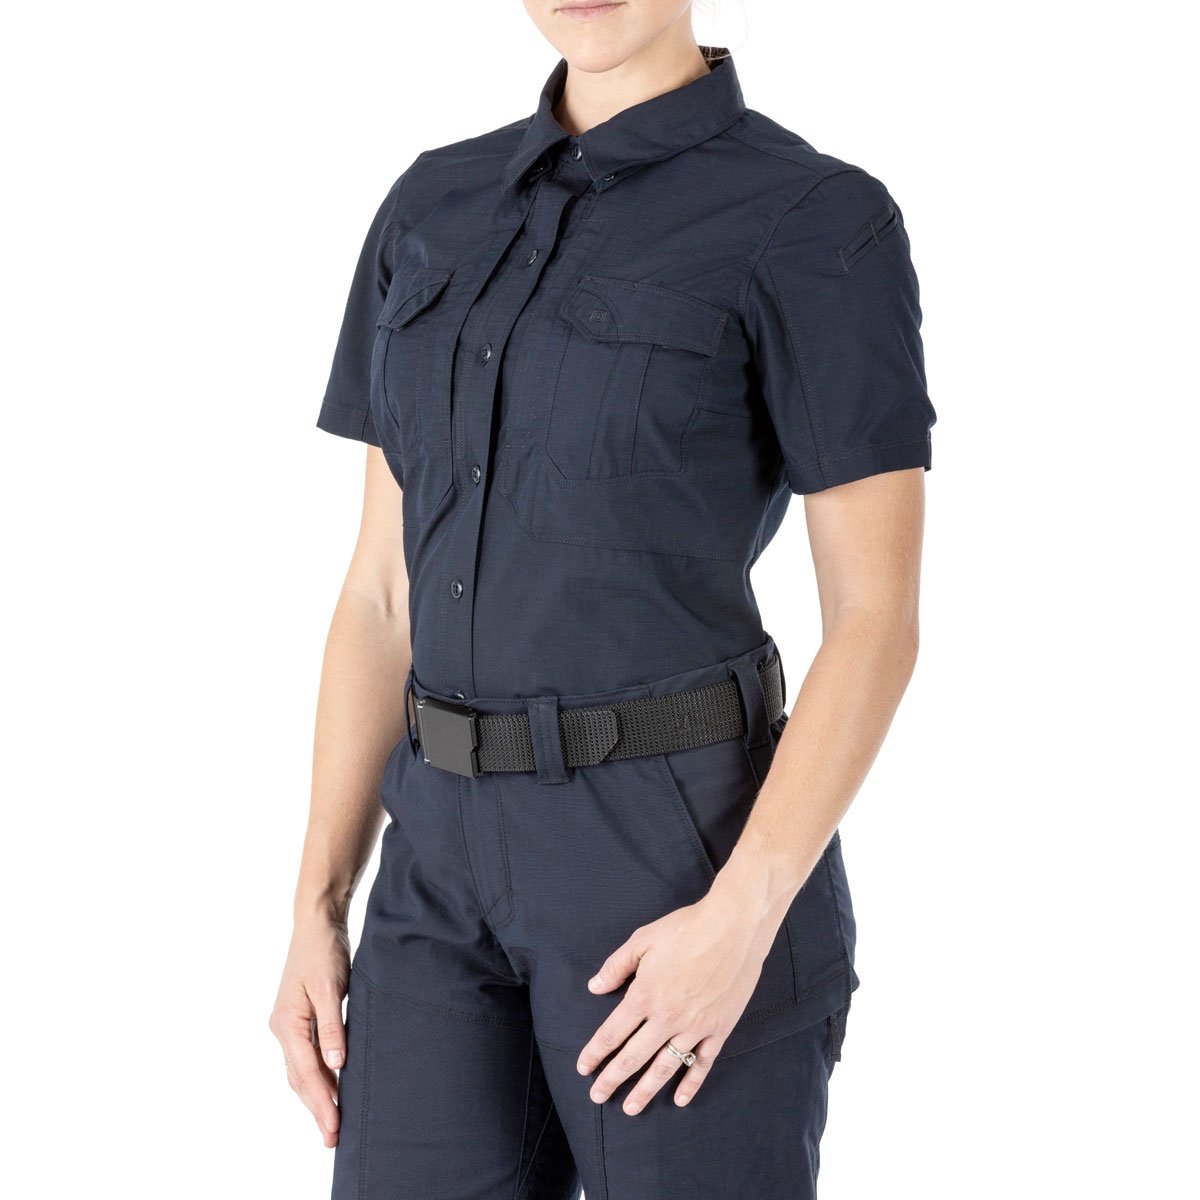 5.11 Tactical Womens Stryke Short Sleeve Shirt Dark Navy Shirts 5.11 Tactical Tactical Gear Supplier Tactical Distributors Australia